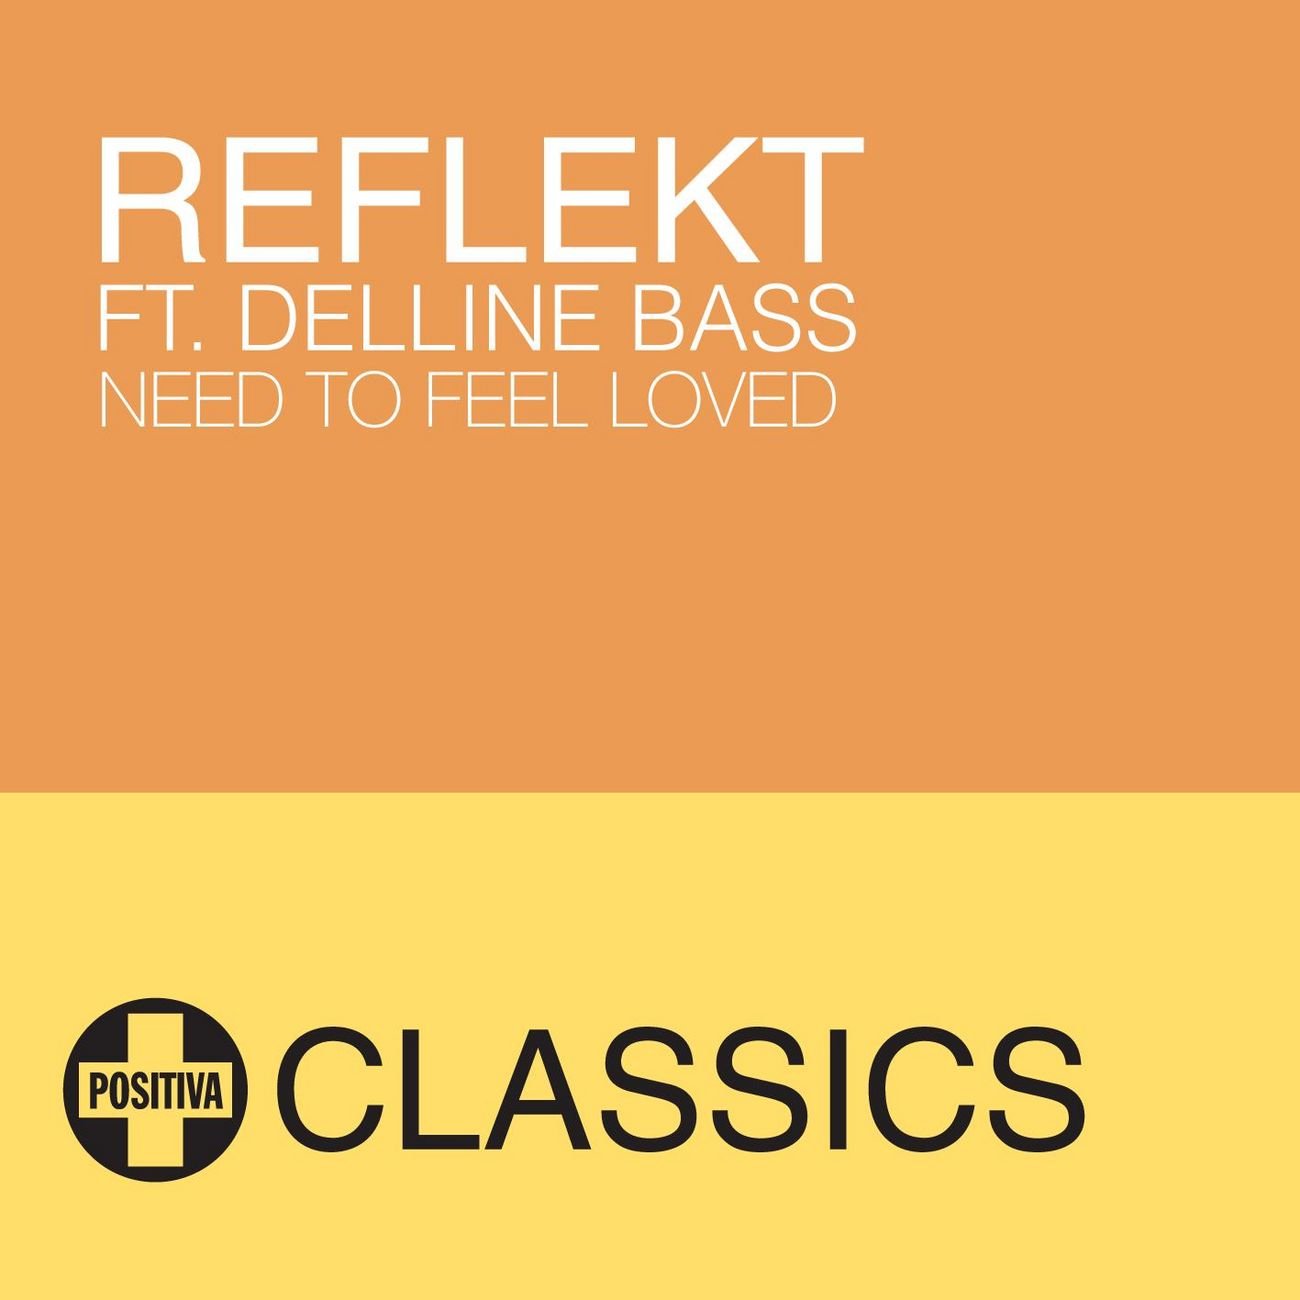 Reflekt need to feel loved. Reflekt ft. Delline Bass need to feel Loved. Adam k Soha need to feel. Reflekt feat Delline Bass.